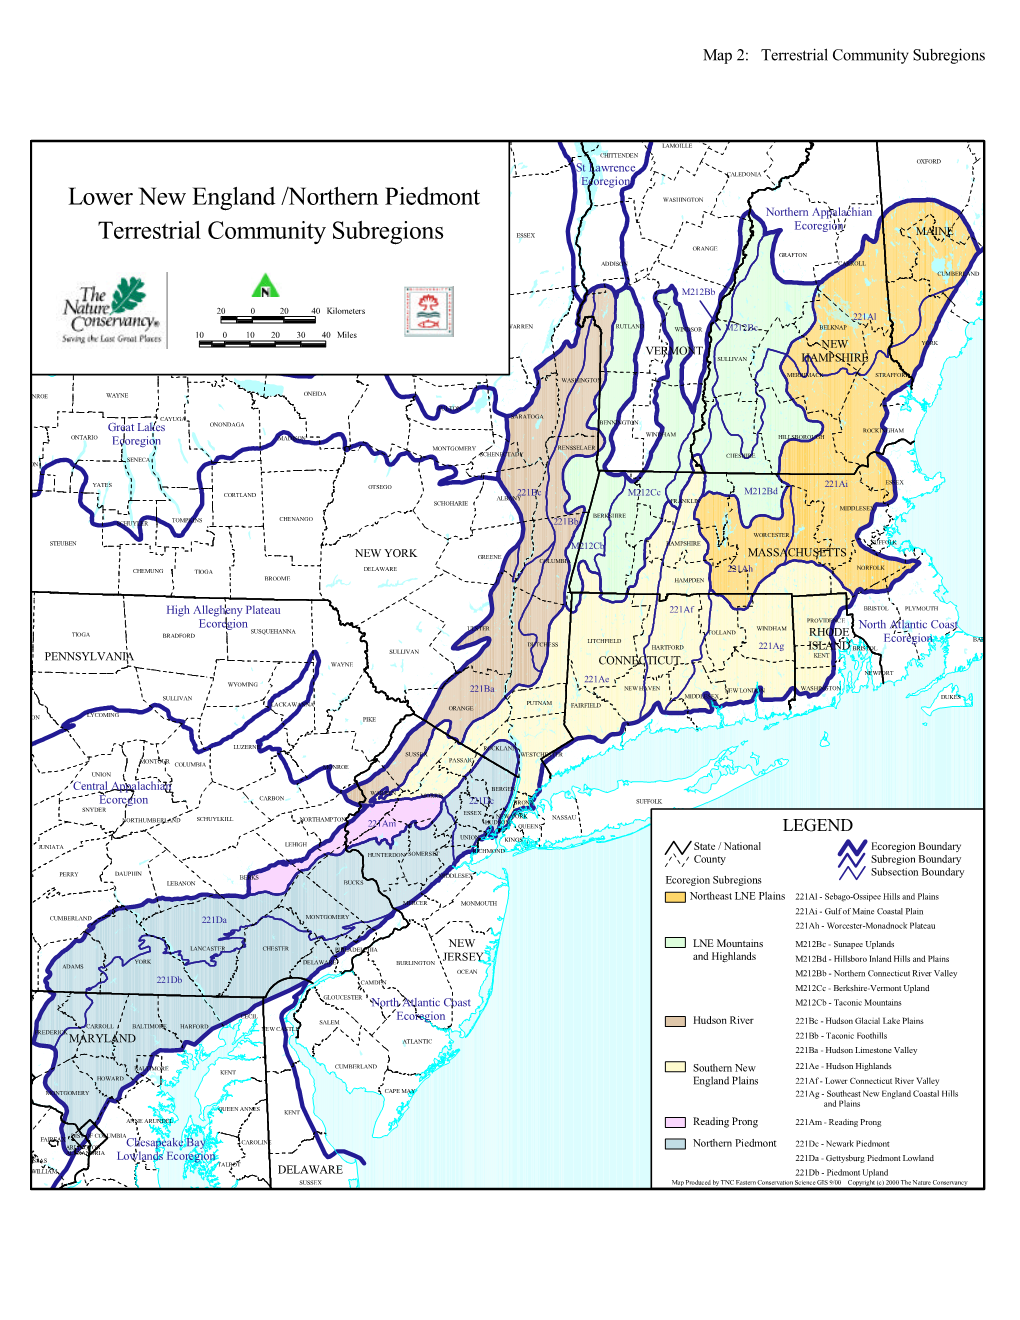 Lower New England /Northern Piedmont Terrestrial Community